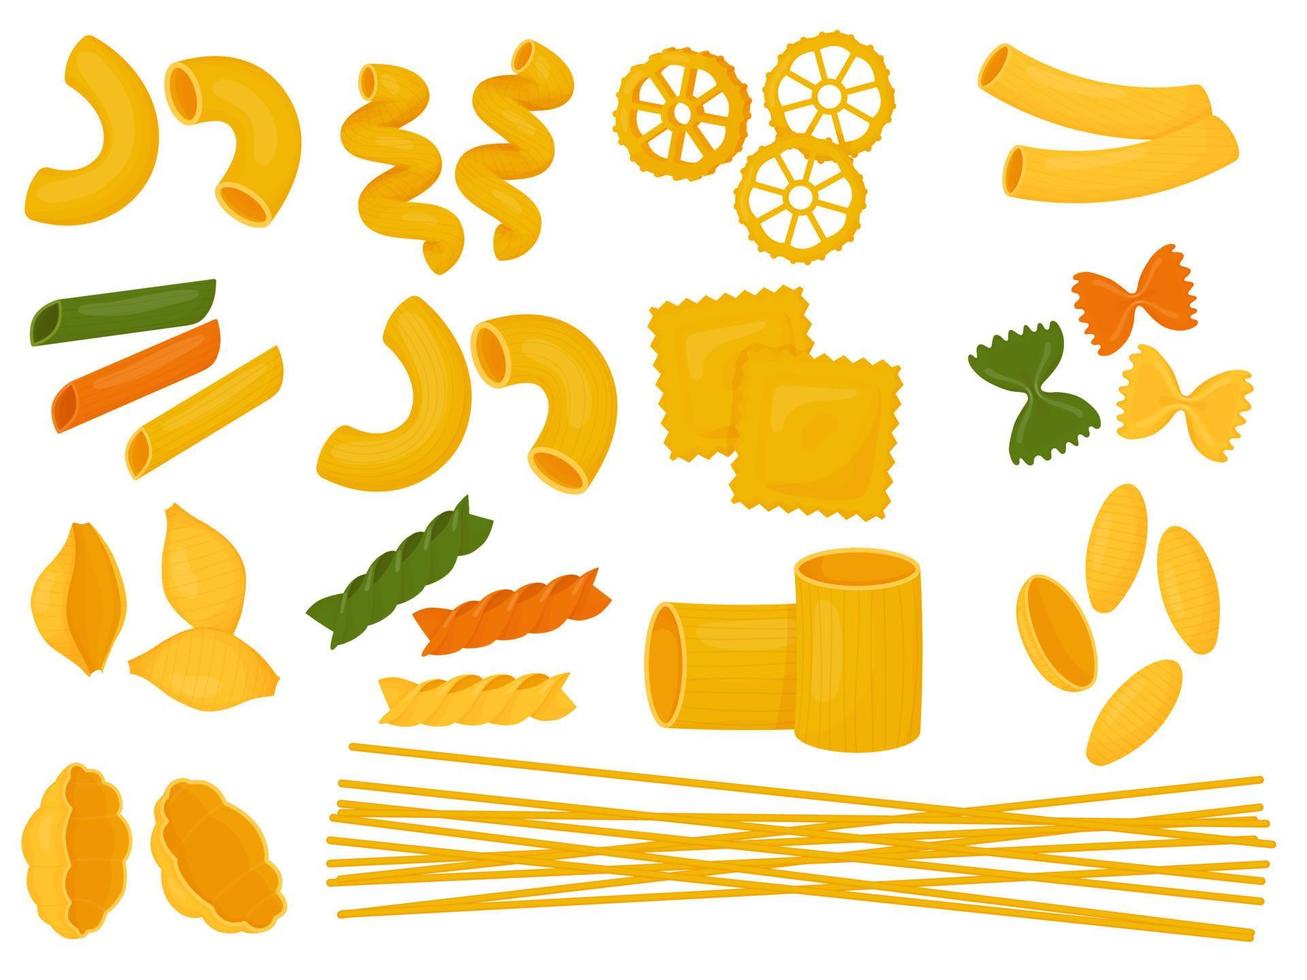 grote set Italiaanse pasta. verschillende soorten Italiaanse pasta. spaghetti, farfalle, penne, rigatoni, ravioli, fusilli, conchiglie, ellebogen, fettucine illustratie. vector